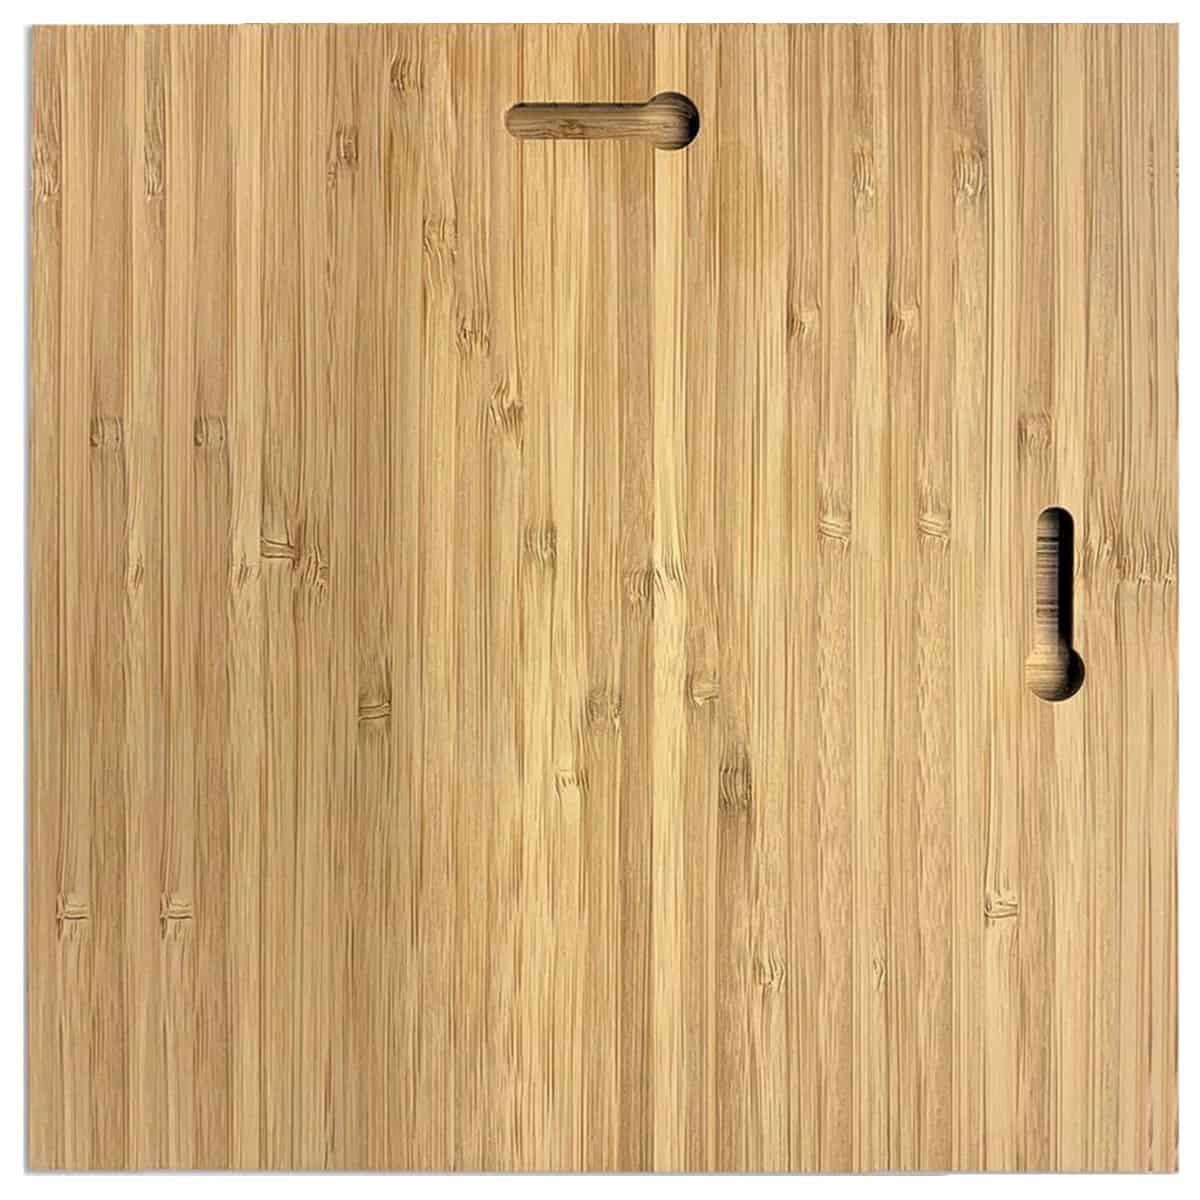 Bamboo Wood print keyhole square